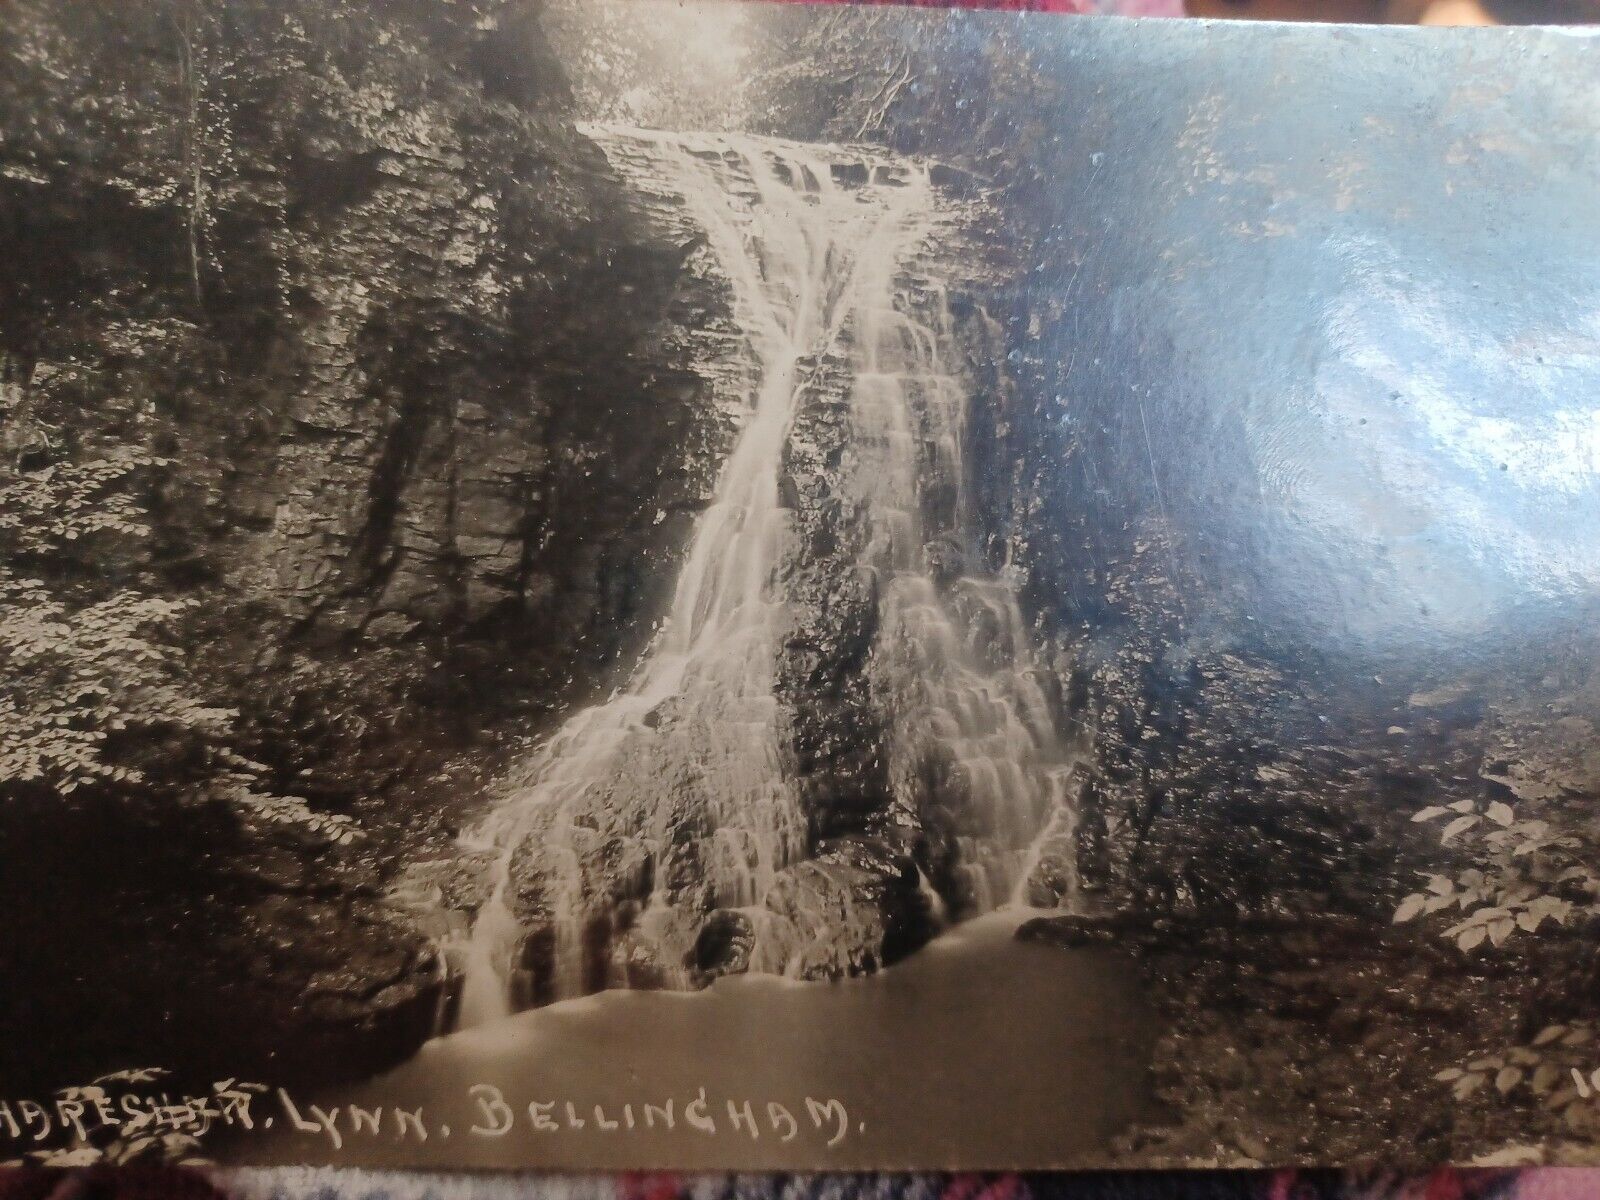 Vintage Service Hareshaw Lynn Waterfall Bellingham